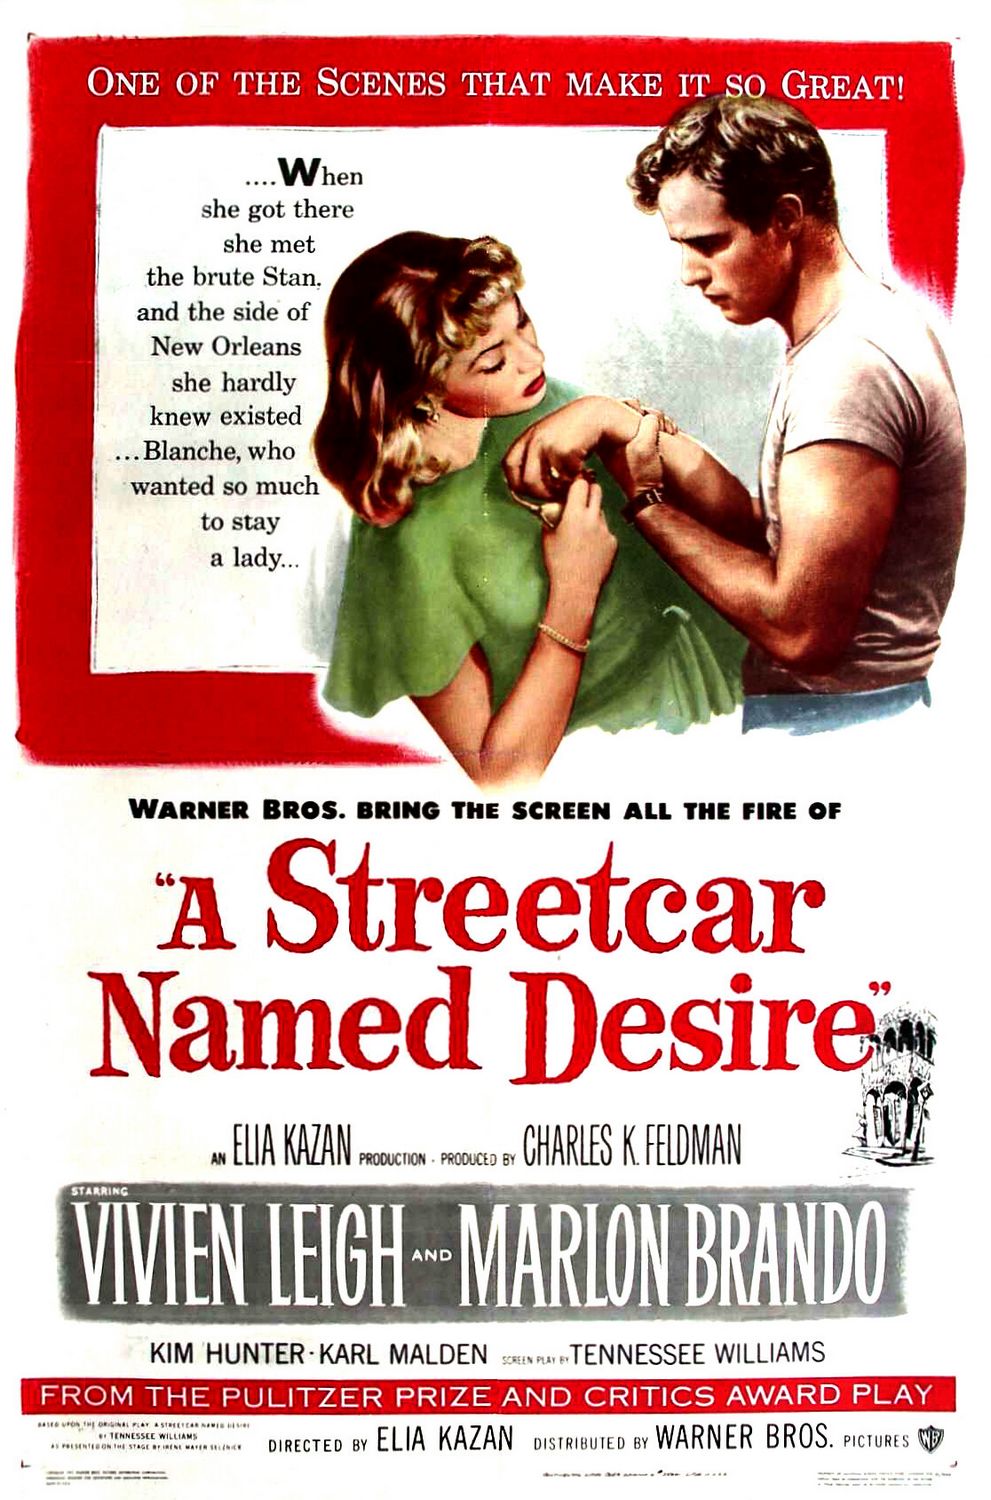 [欲望号街车].A.Streetcar.Named.Desire.1951.US.BluRay.1080p.AVC.DTS-HD.MA.1.0-weiwei2001   38.6G: B" h+ ?) b) M; R) S& w/ [' y-2.jpg